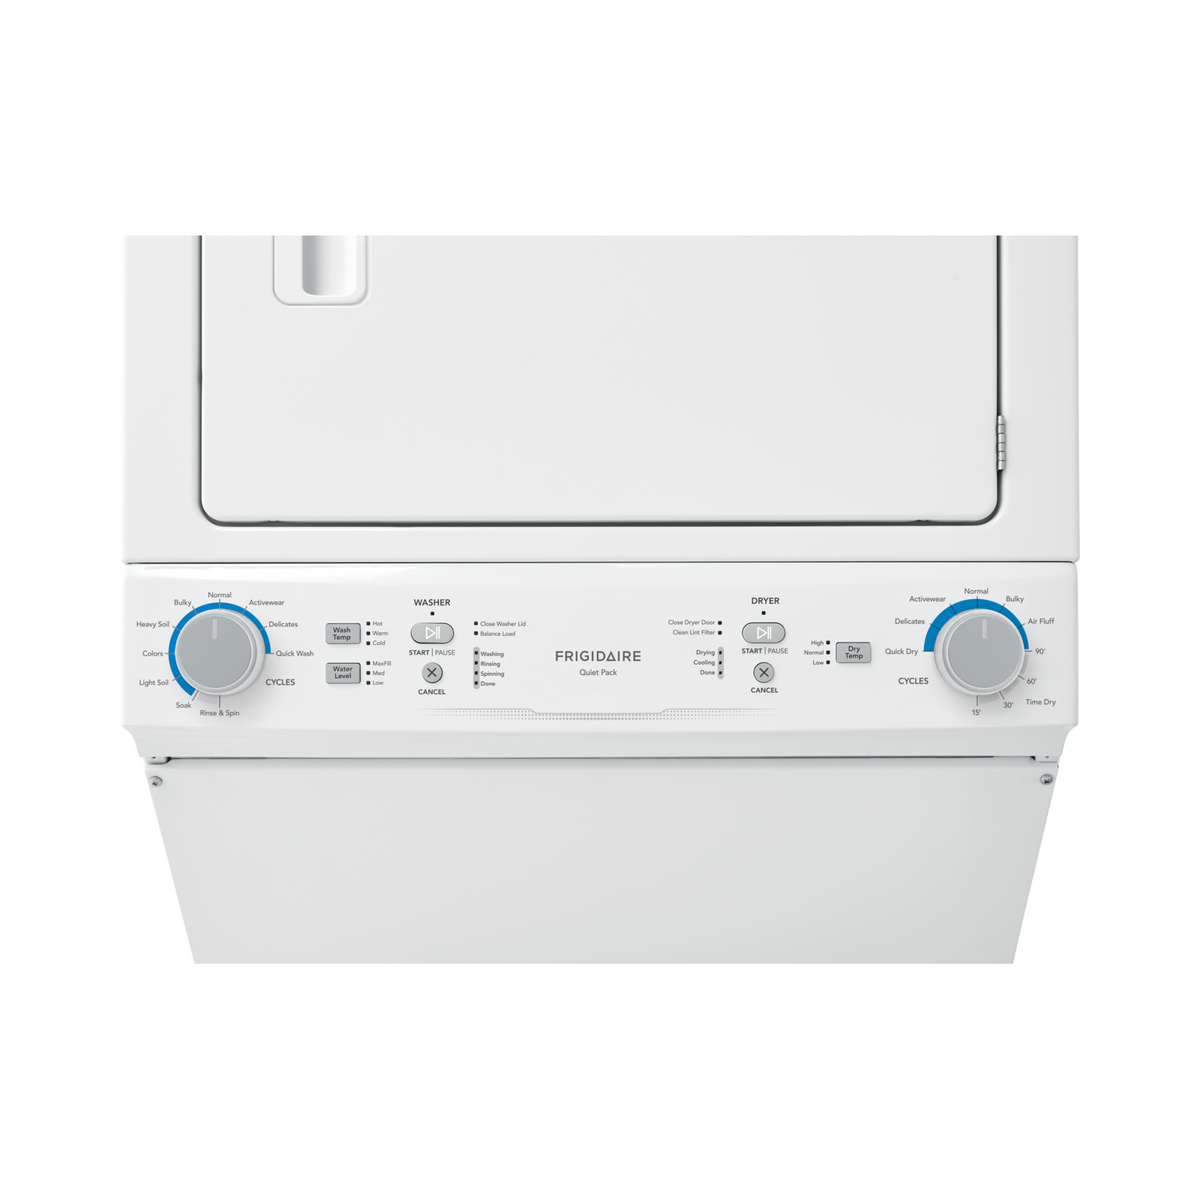 FRIGIDAIRE FLCG7522AW Gas Washer/Dryer Laundry Center